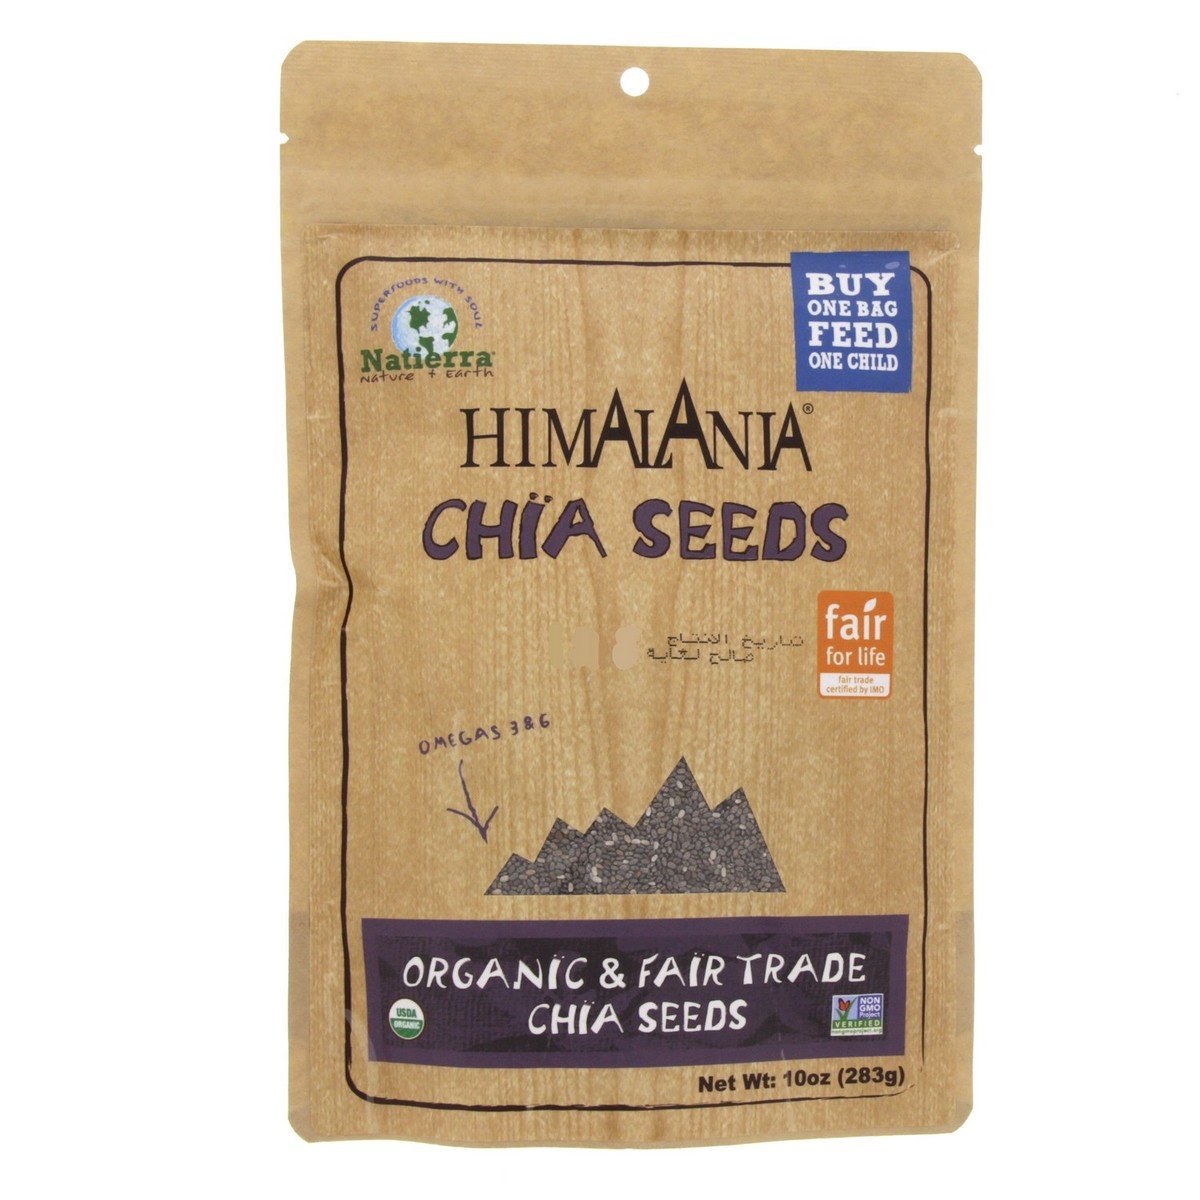 Himalania Chia Seeds Organic And Fair Trade Chia Seeds 283 g